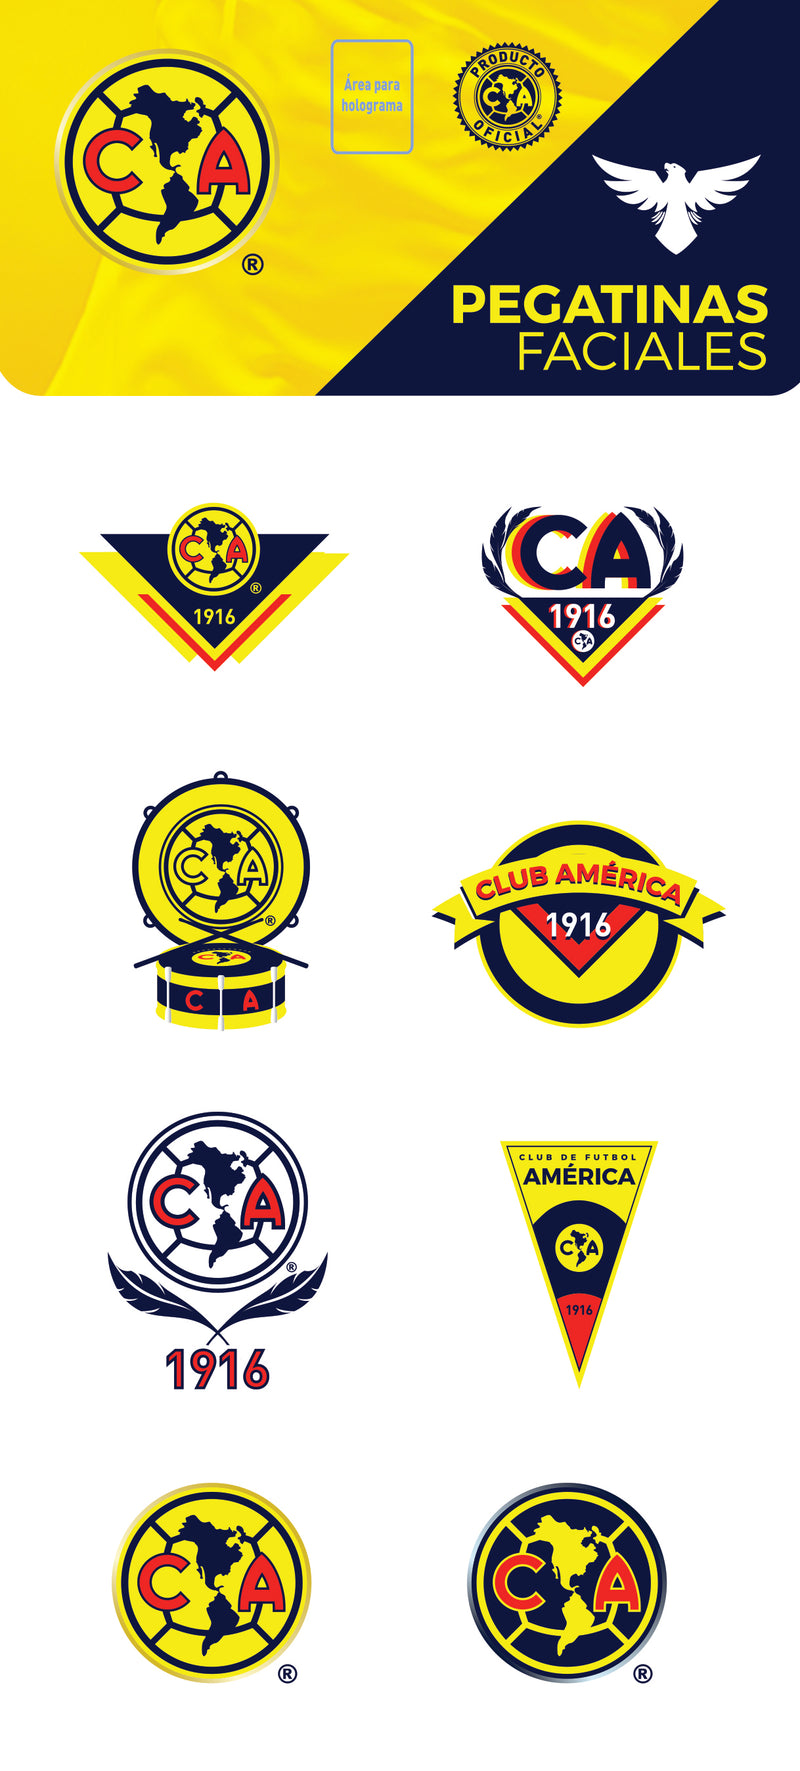 Club America Official Face Stickers - Maccabi Art